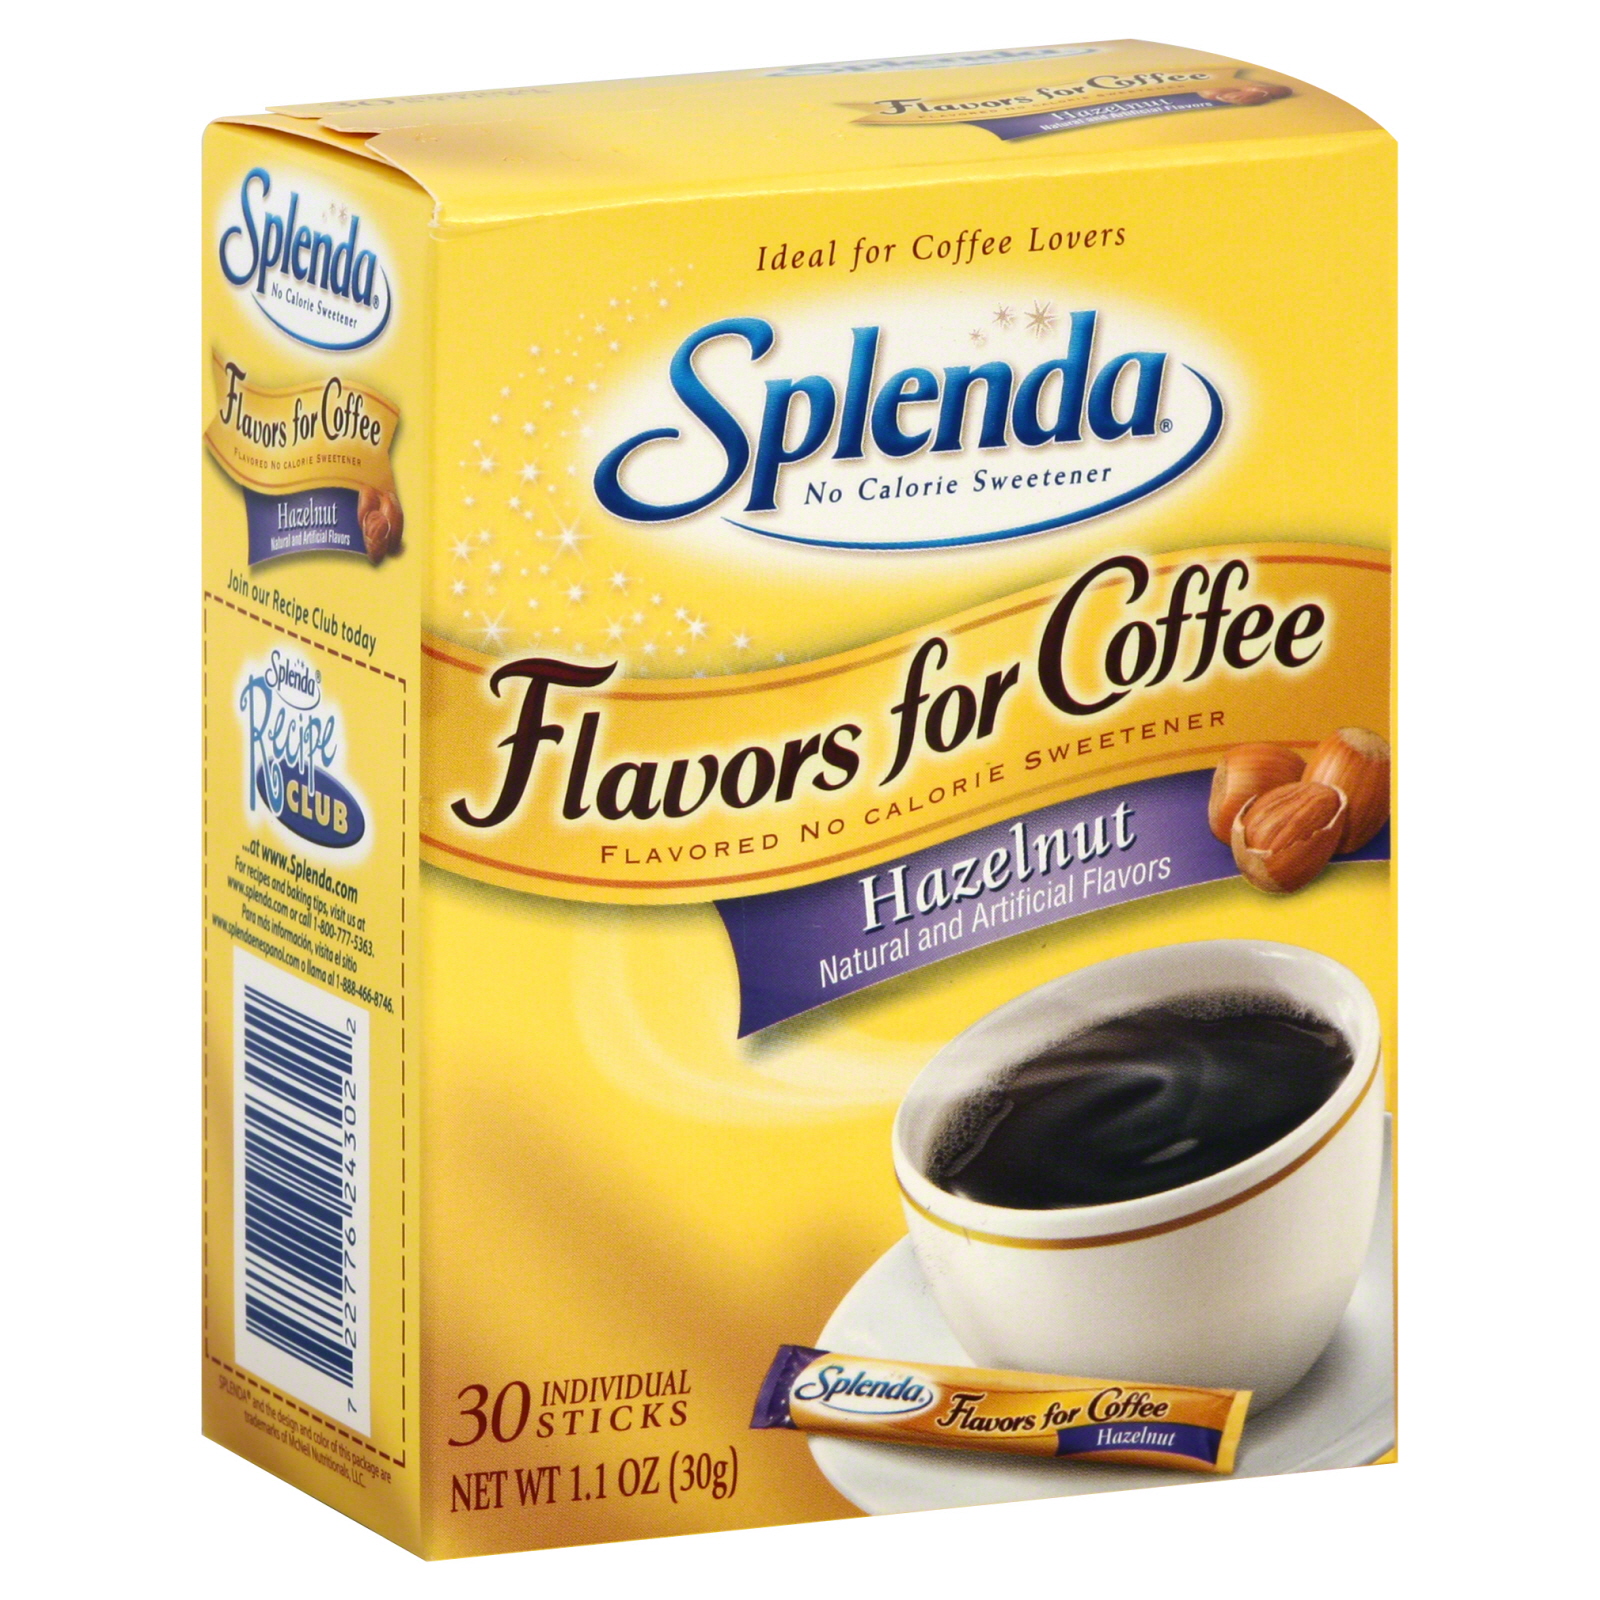 Splenda SCJ243020 Flavors For Coffee No Calorie Sweetener, Hazelnut, 30 sticks [1.1 oz (30 g)]